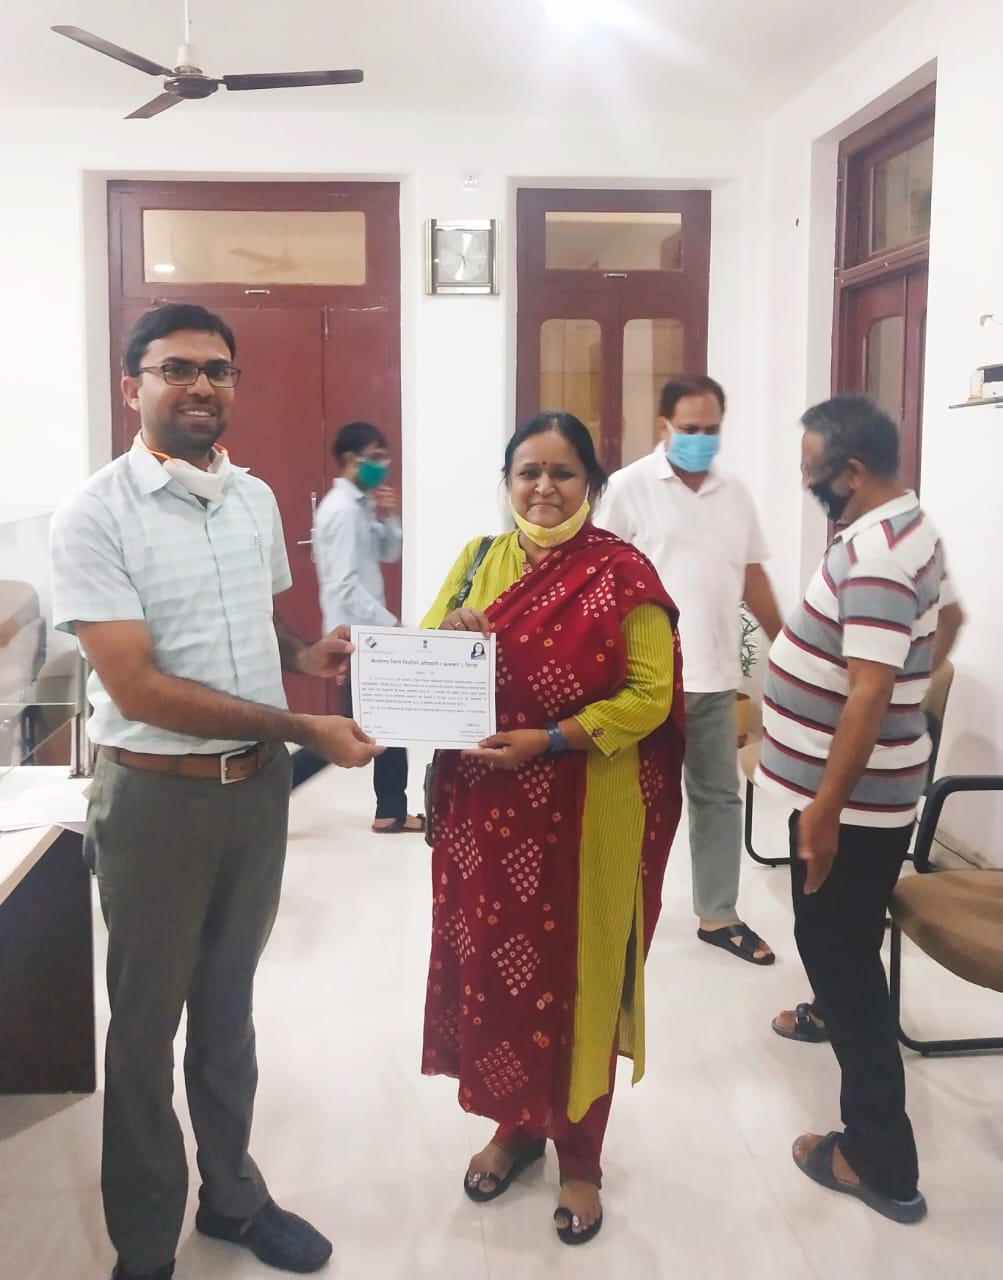 निर्वाचन साक्षरता क्लब (ई एल सी) की जिला नोडल अधिकारी डॉ रीना श्रीवास्तव प्रशस्ति पत्र से सम्मानित